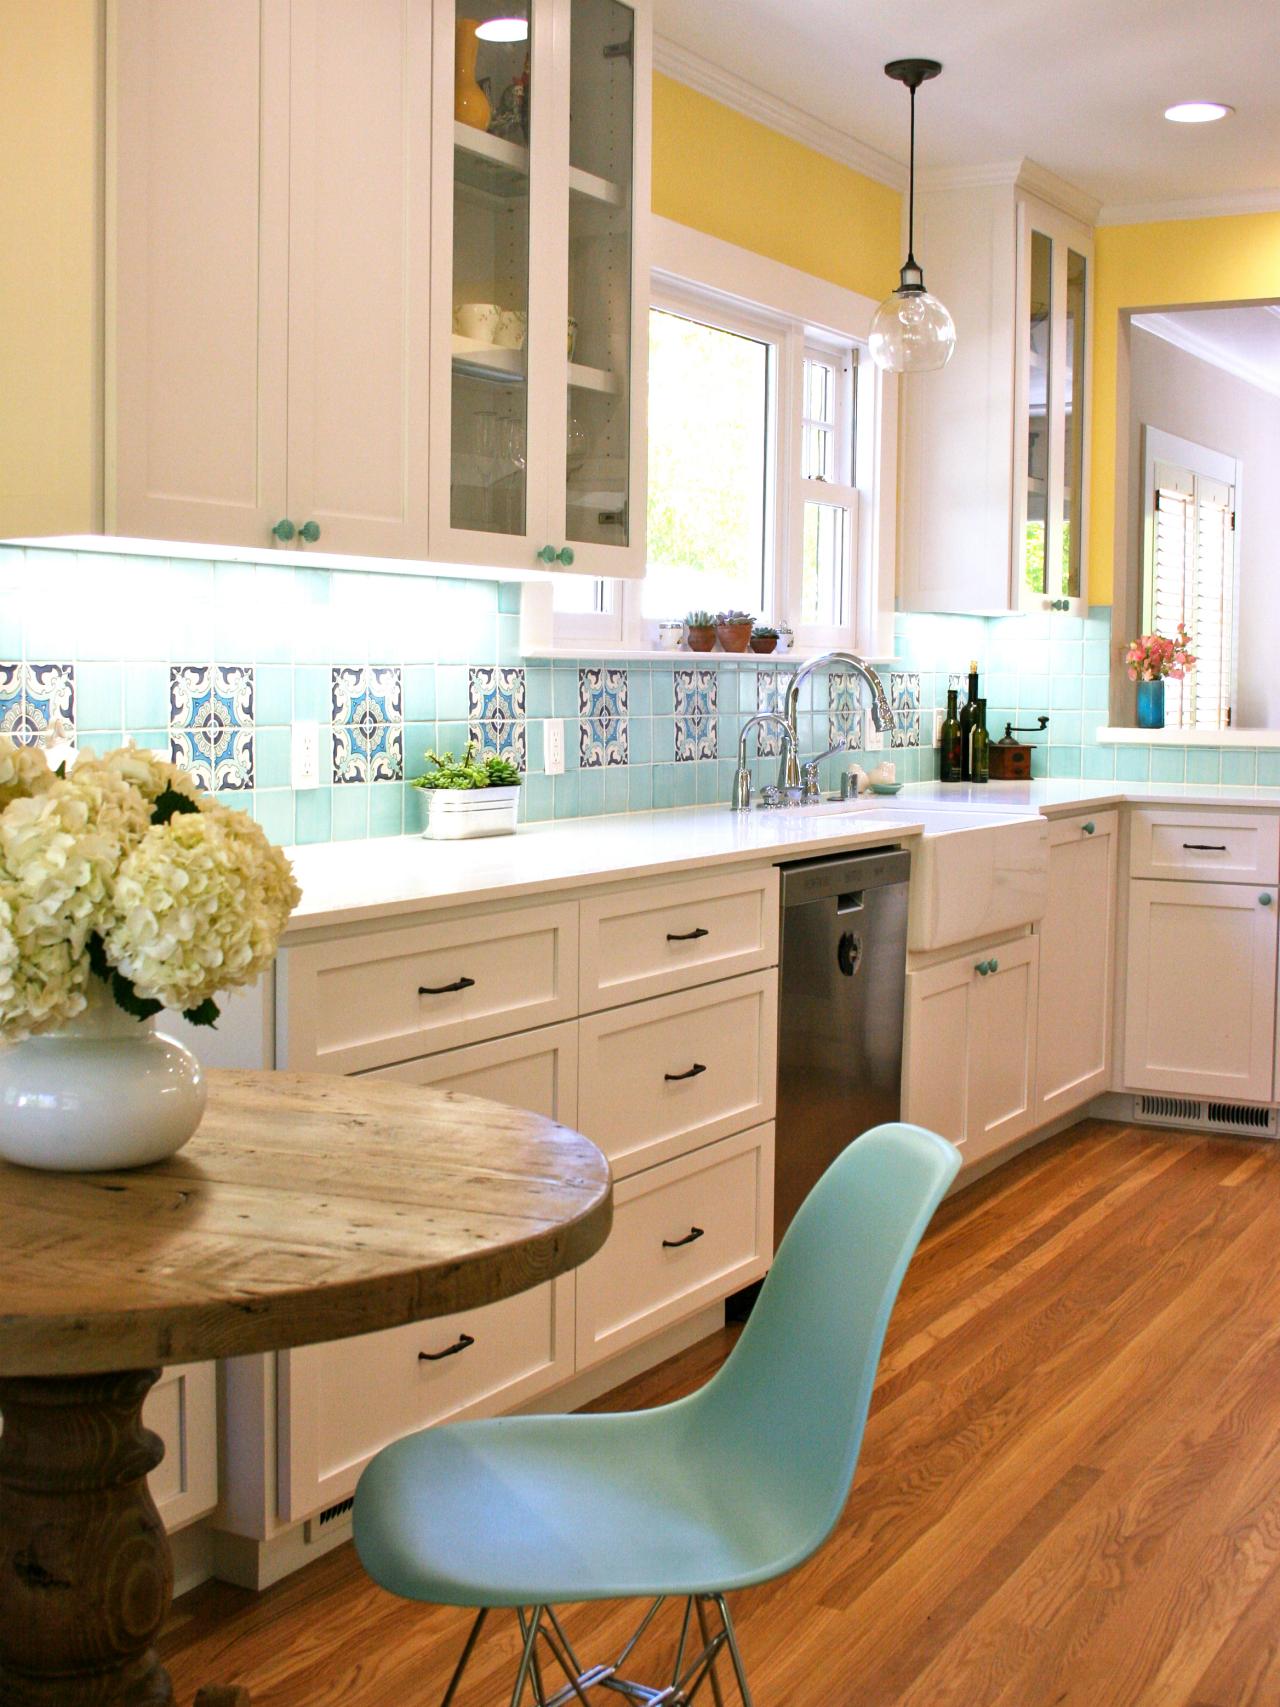 Inspiring Kitchen Backsplash Design Ideas   HGTV's Decorating ...